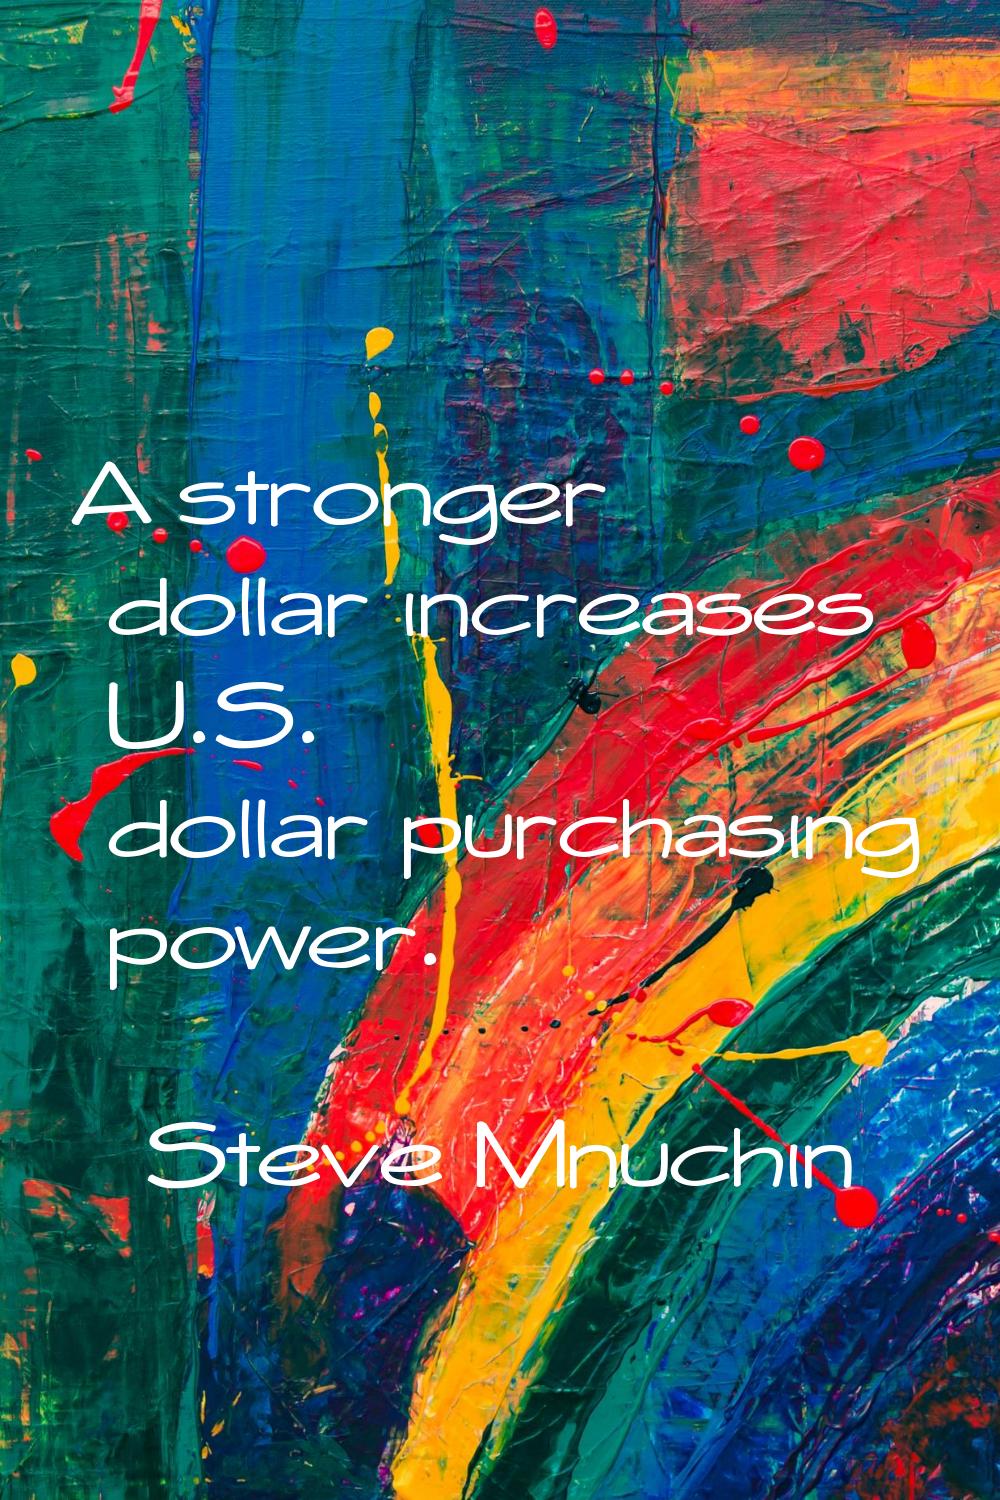 A stronger dollar increases U.S. dollar purchasing power.